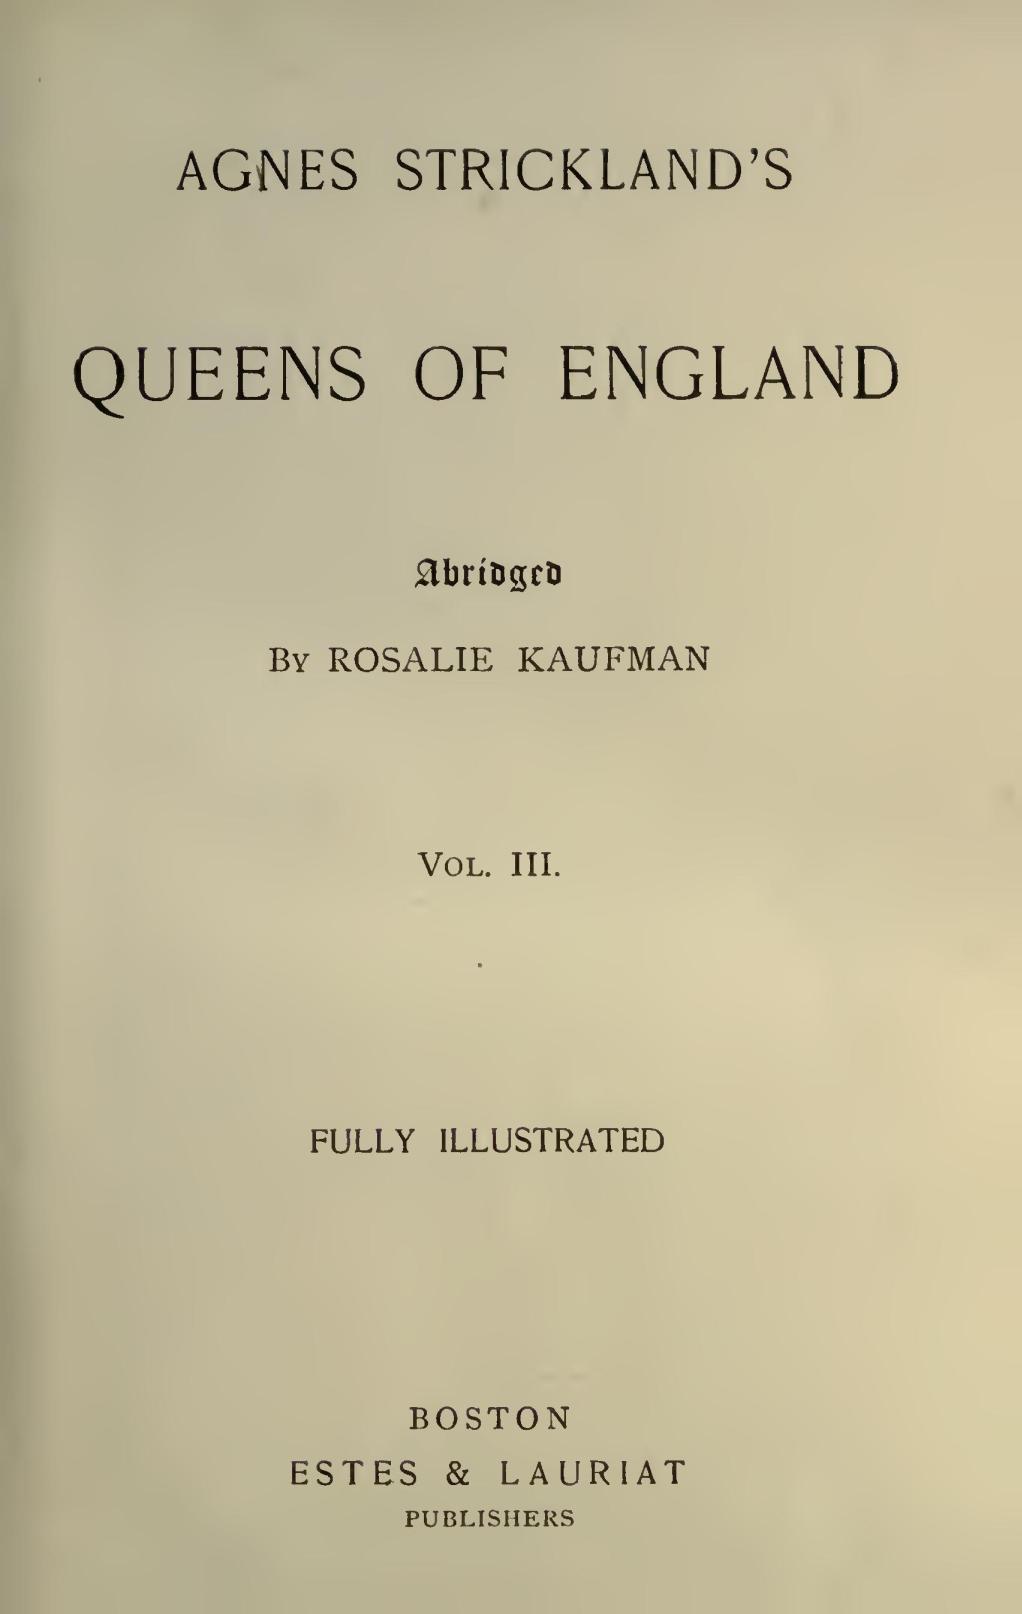 Agnes Strickland's Queens of England, by Rosalie Kaufman